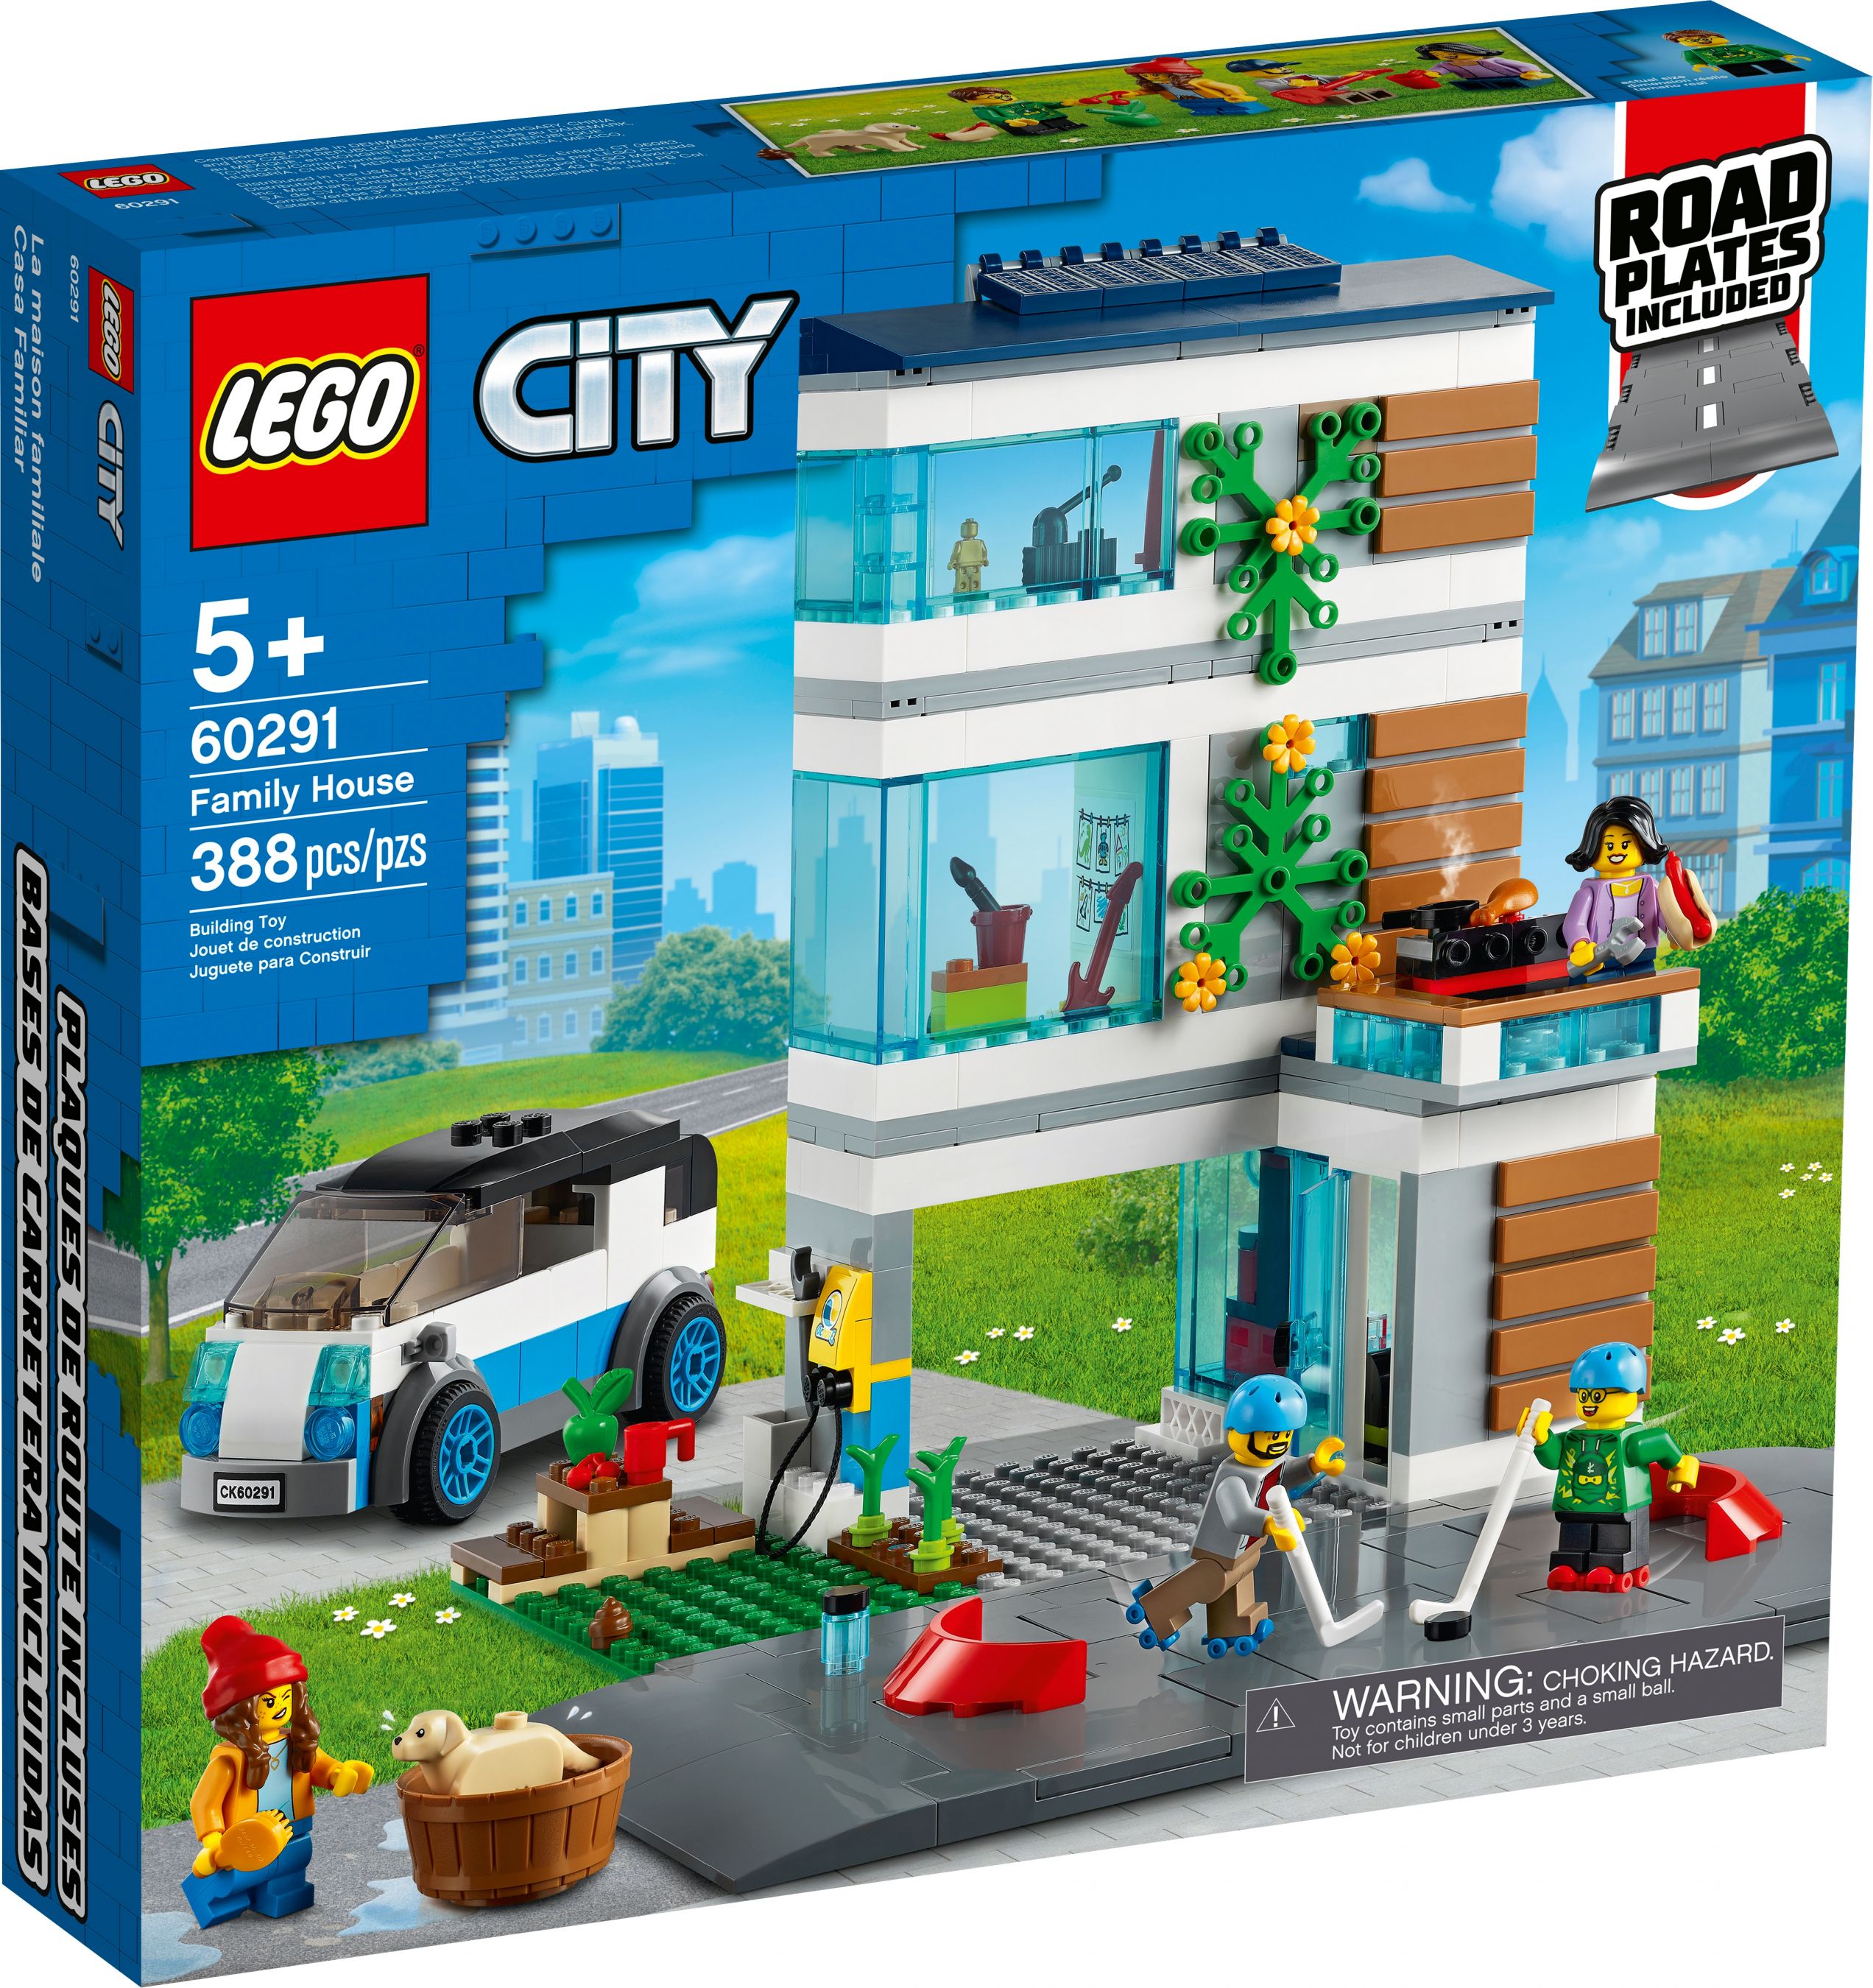 LEGO City 60291 Modernes Familienhaus LEGO_60291_box1_v39.jpg